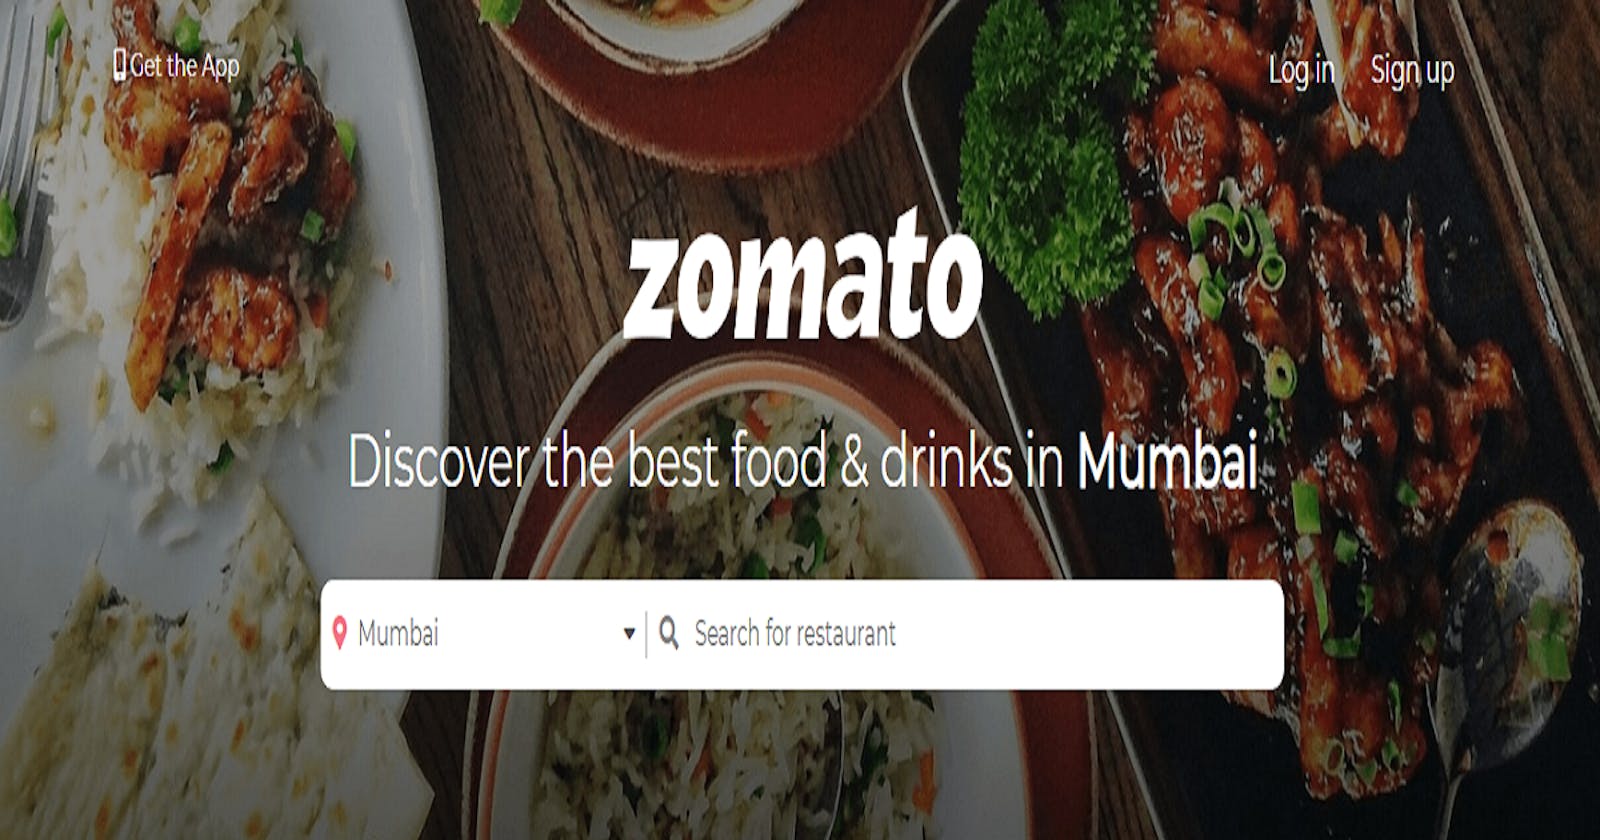 Zomato home page clone using HTML & CSS